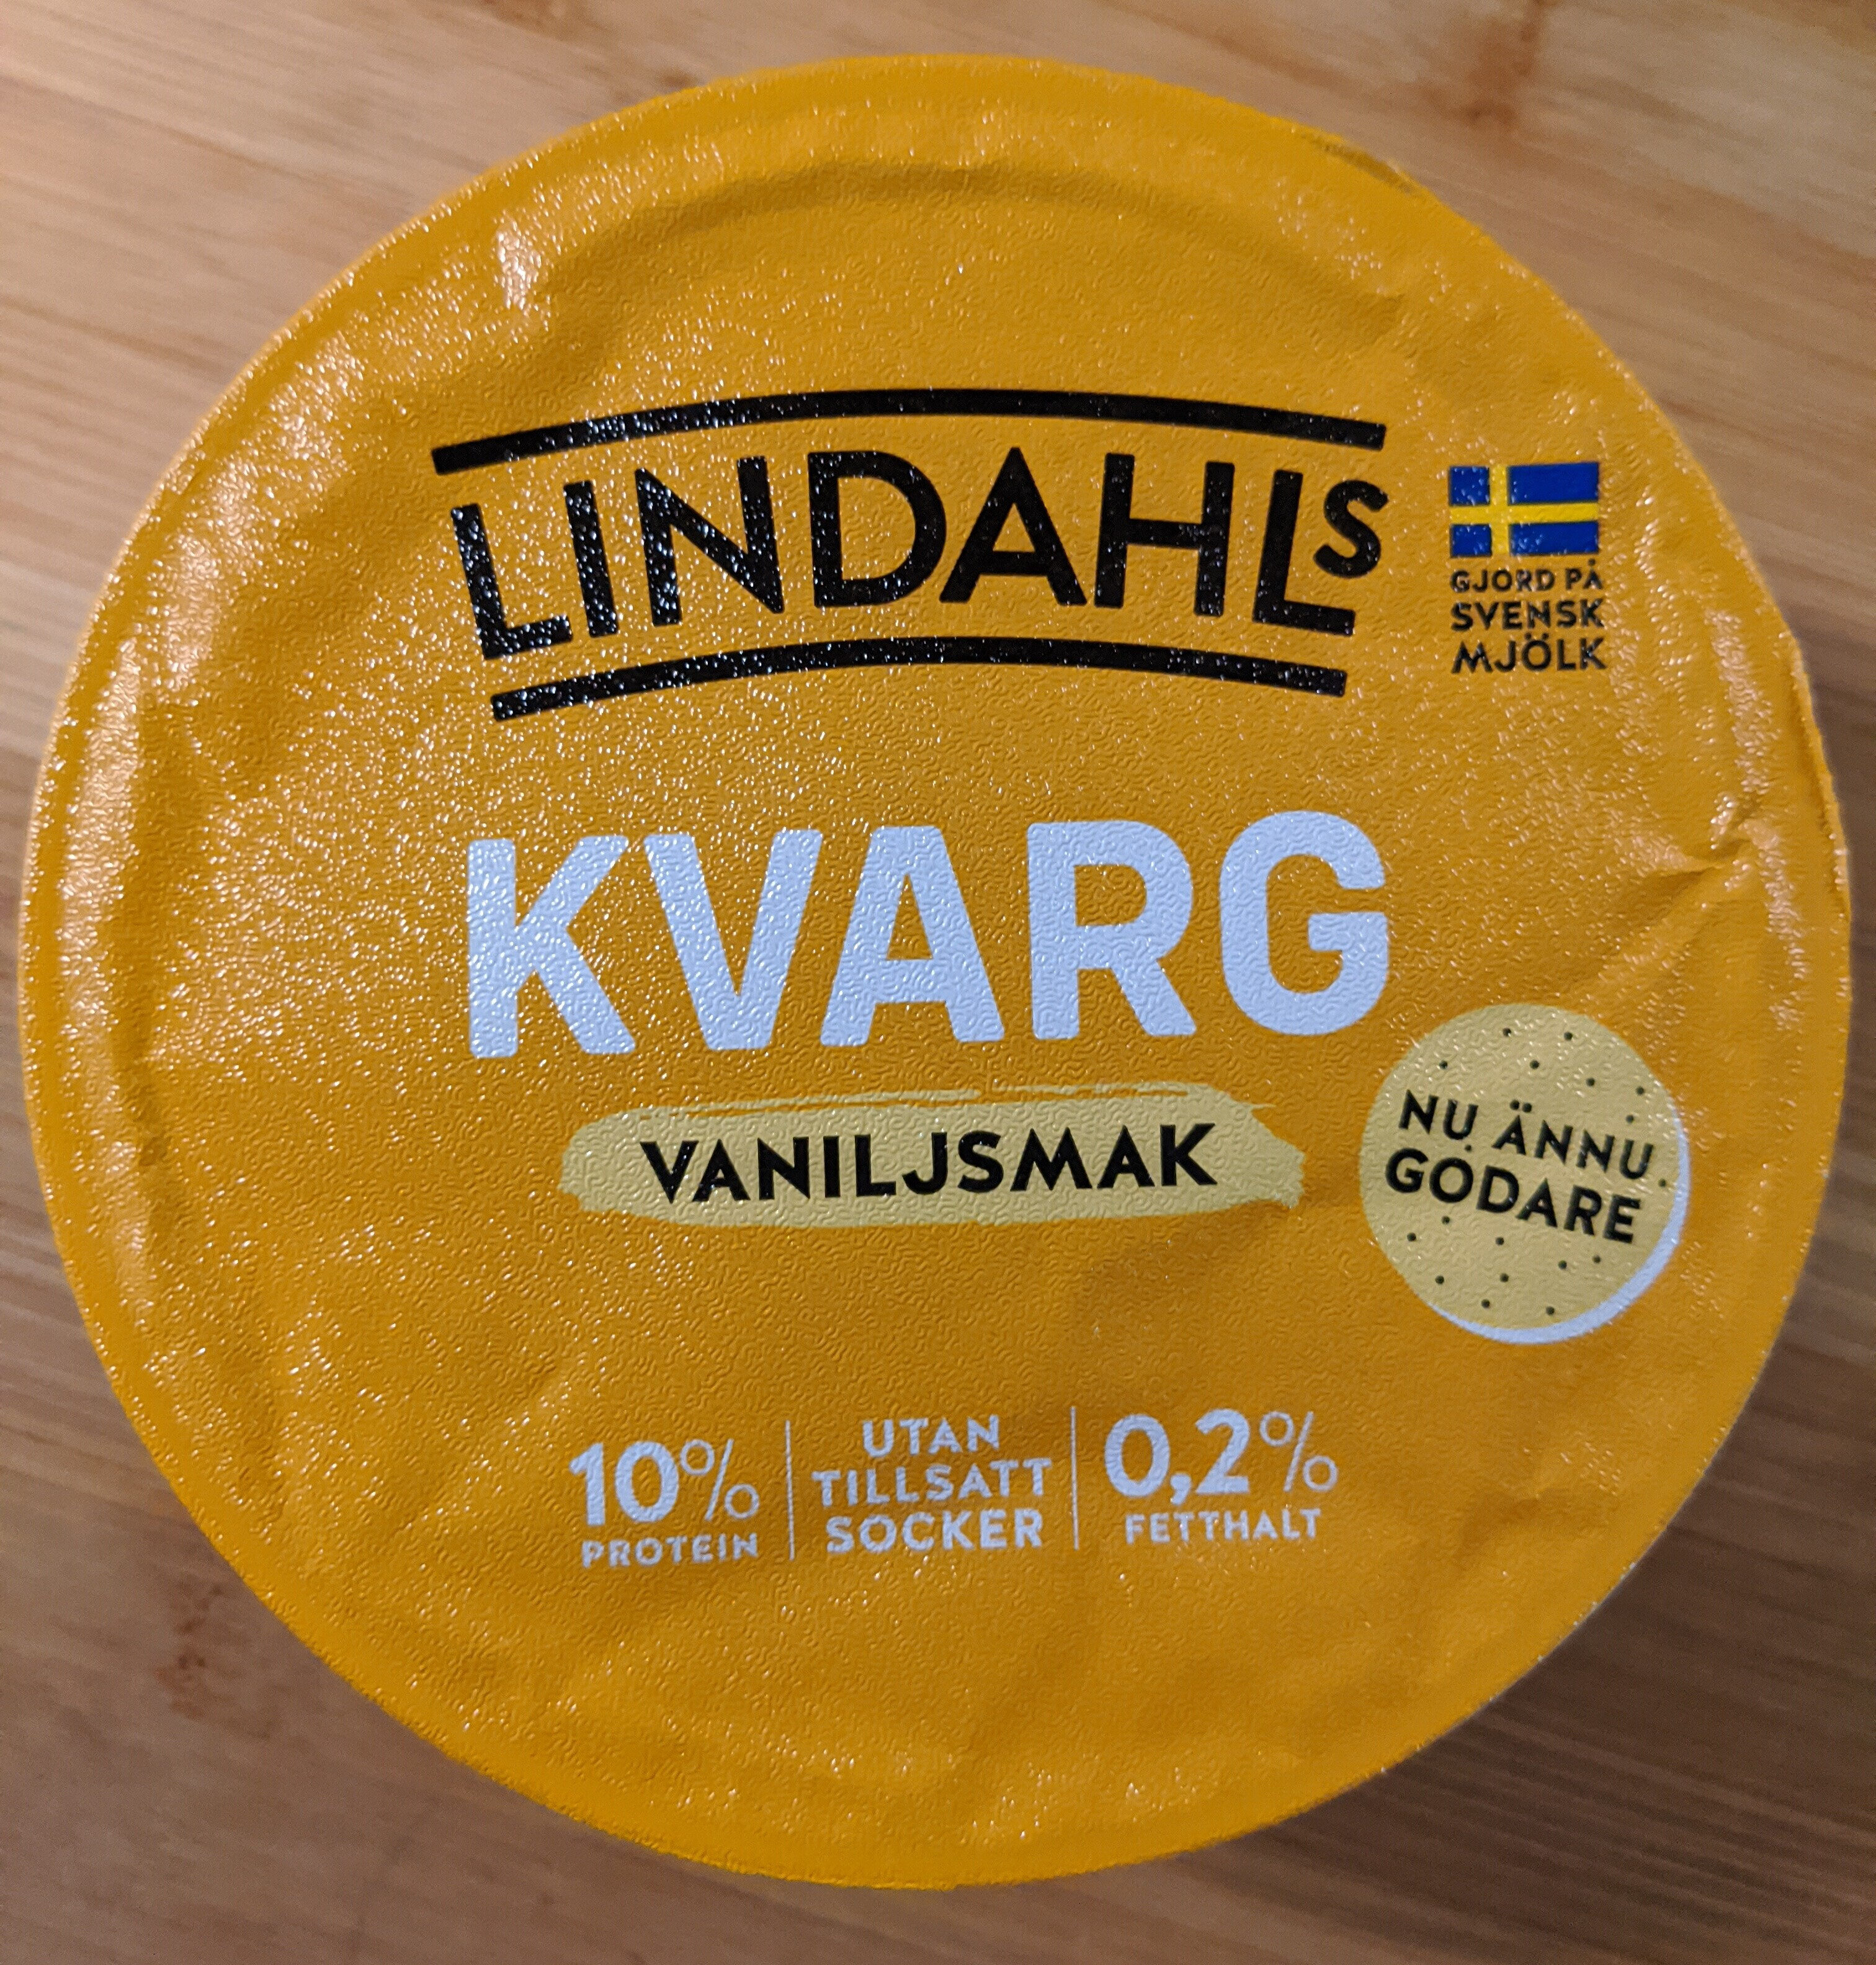 Kvarg Vaniljsmak - Produkt